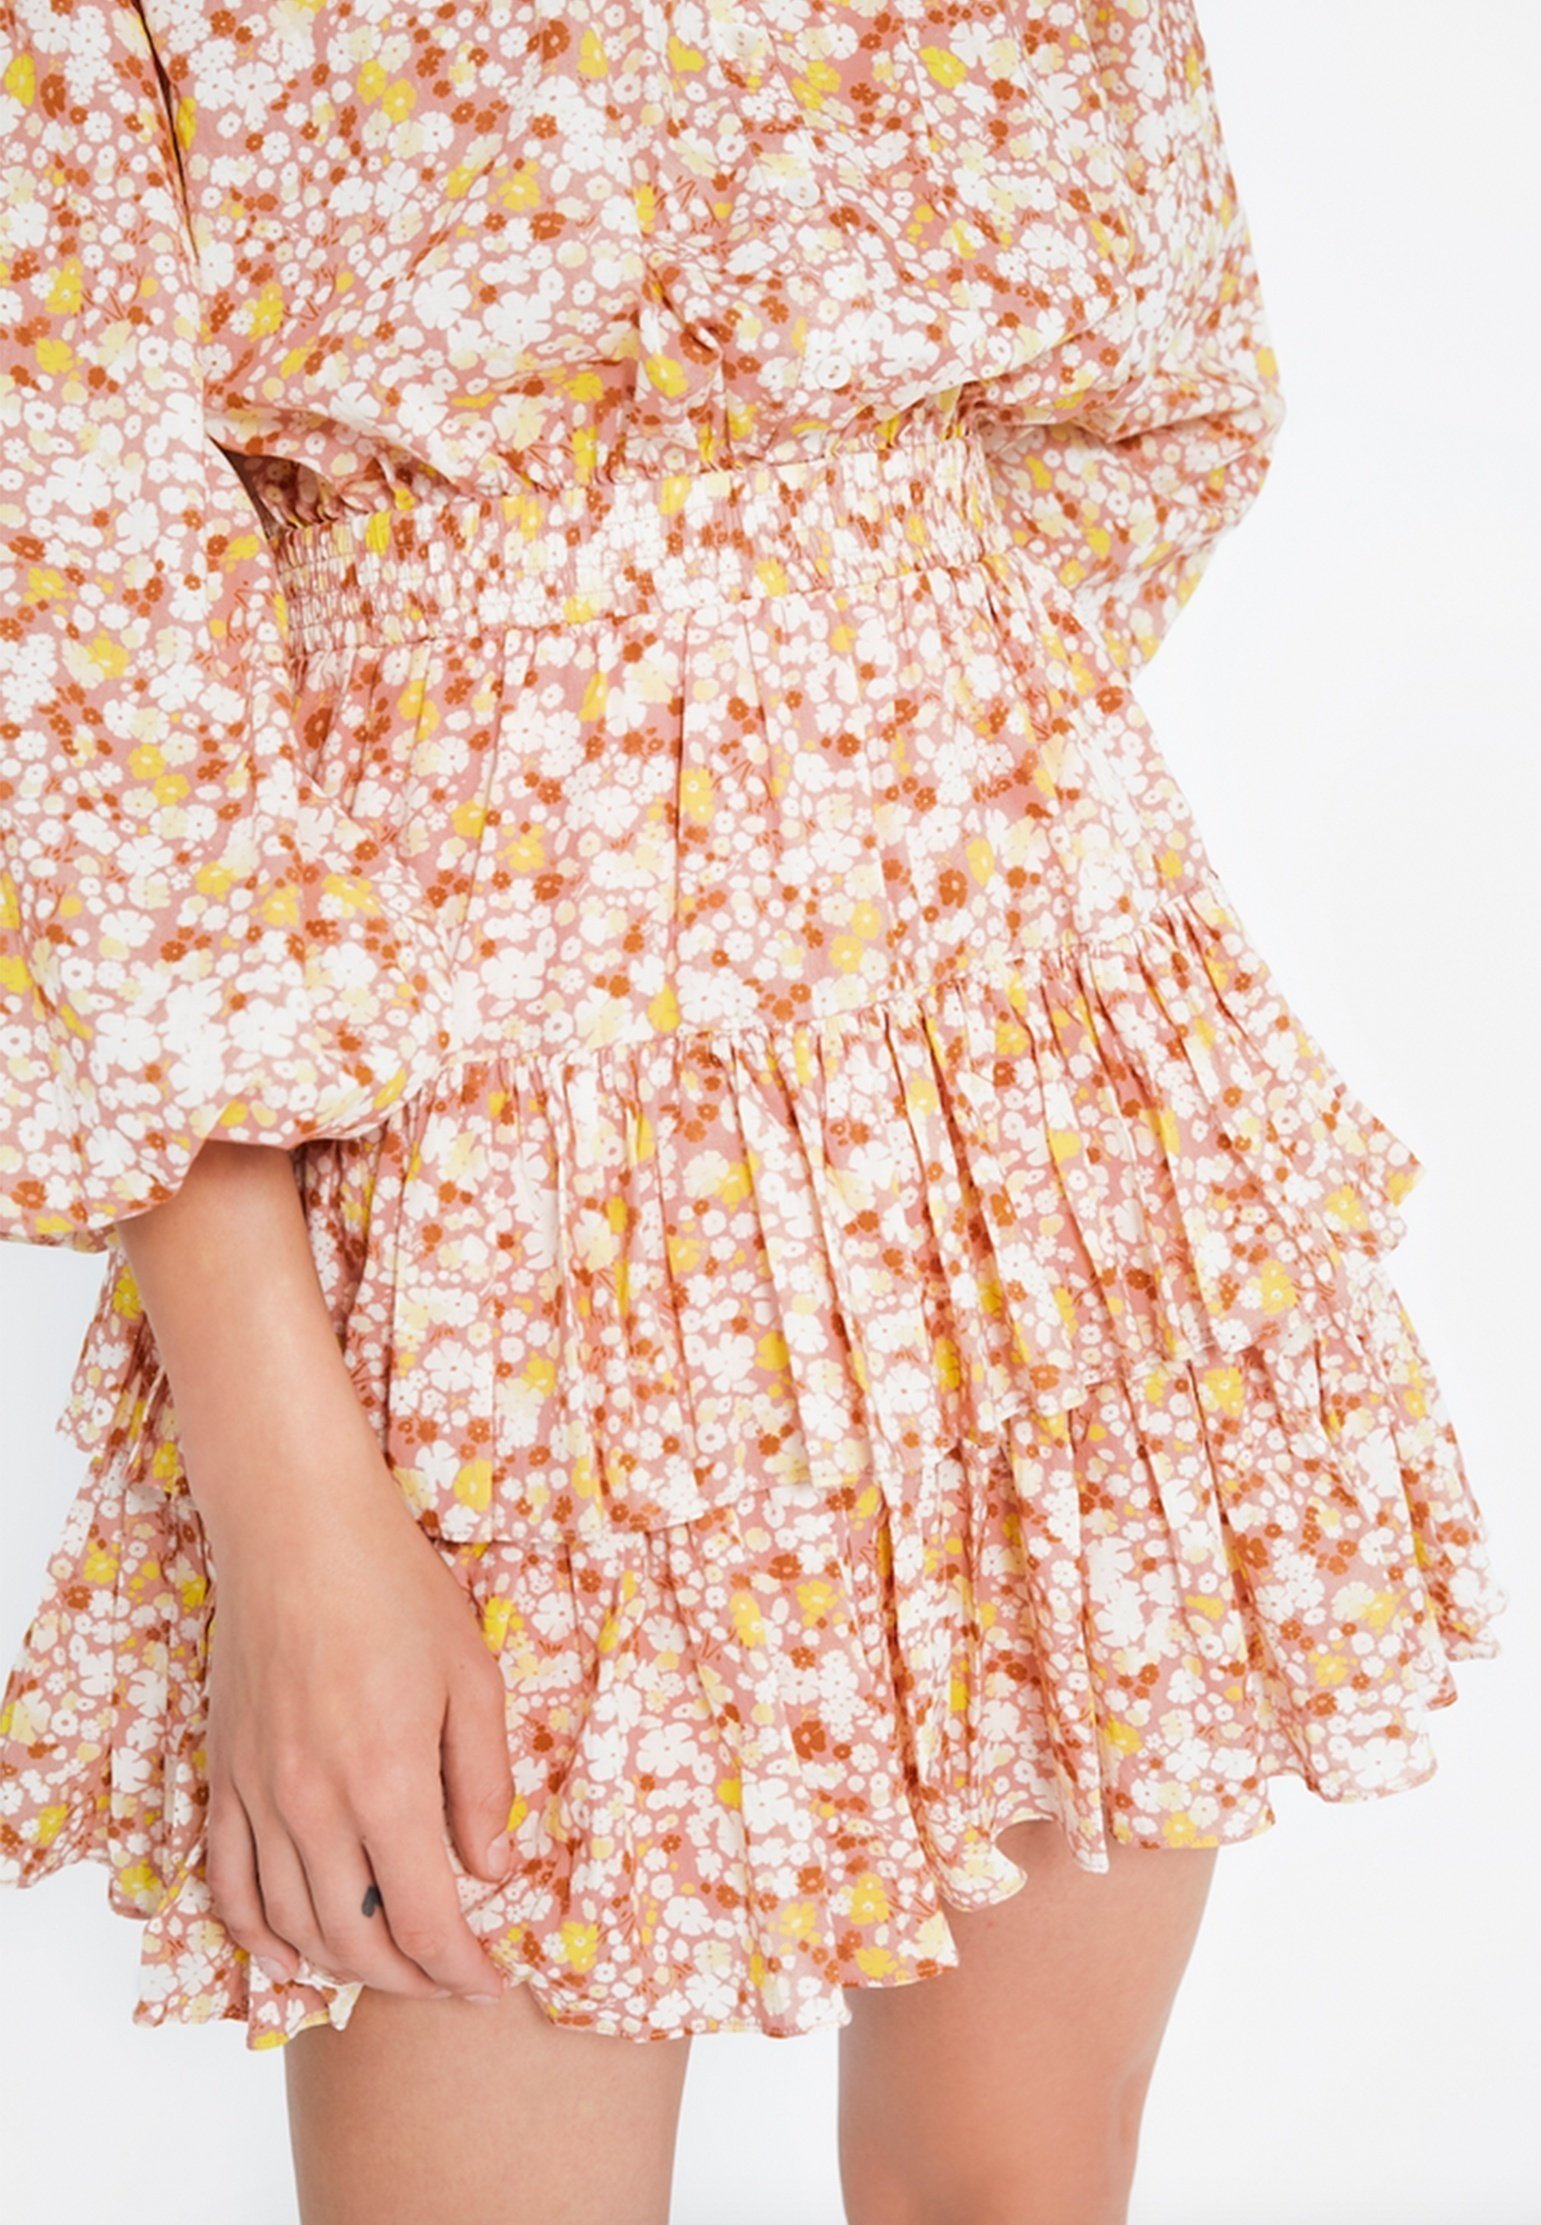 Dress MAIA BERGMAN Color: pink (Code: 1026) in online store Allure